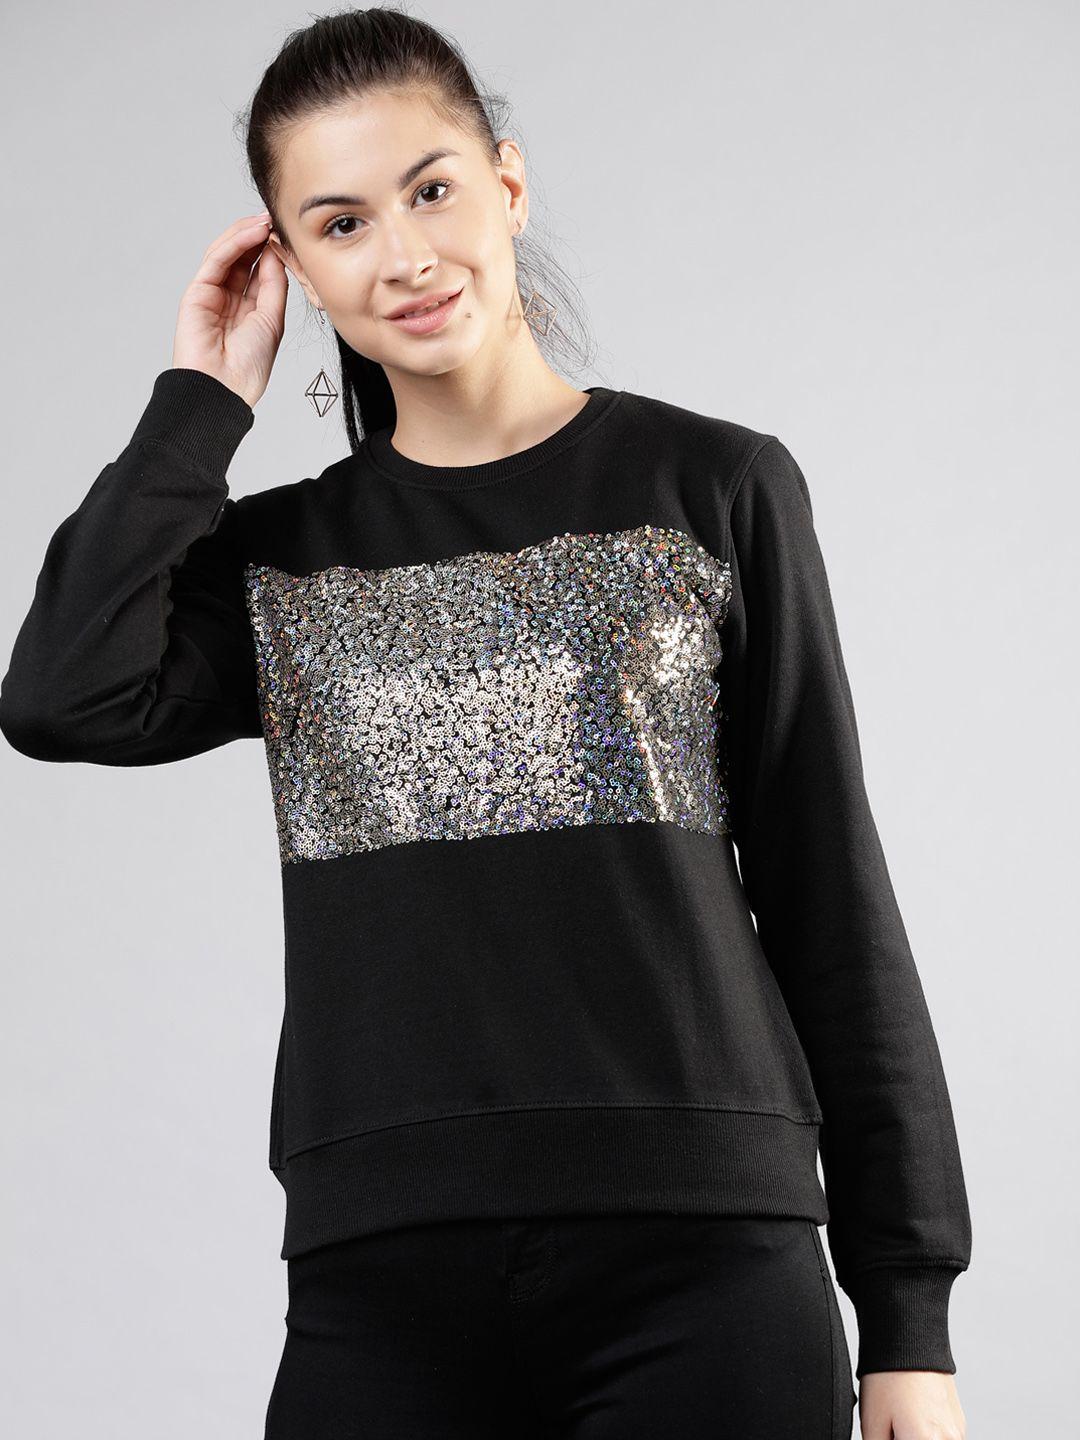 tokyo-talkies-women-black-embellished-sweatshirt